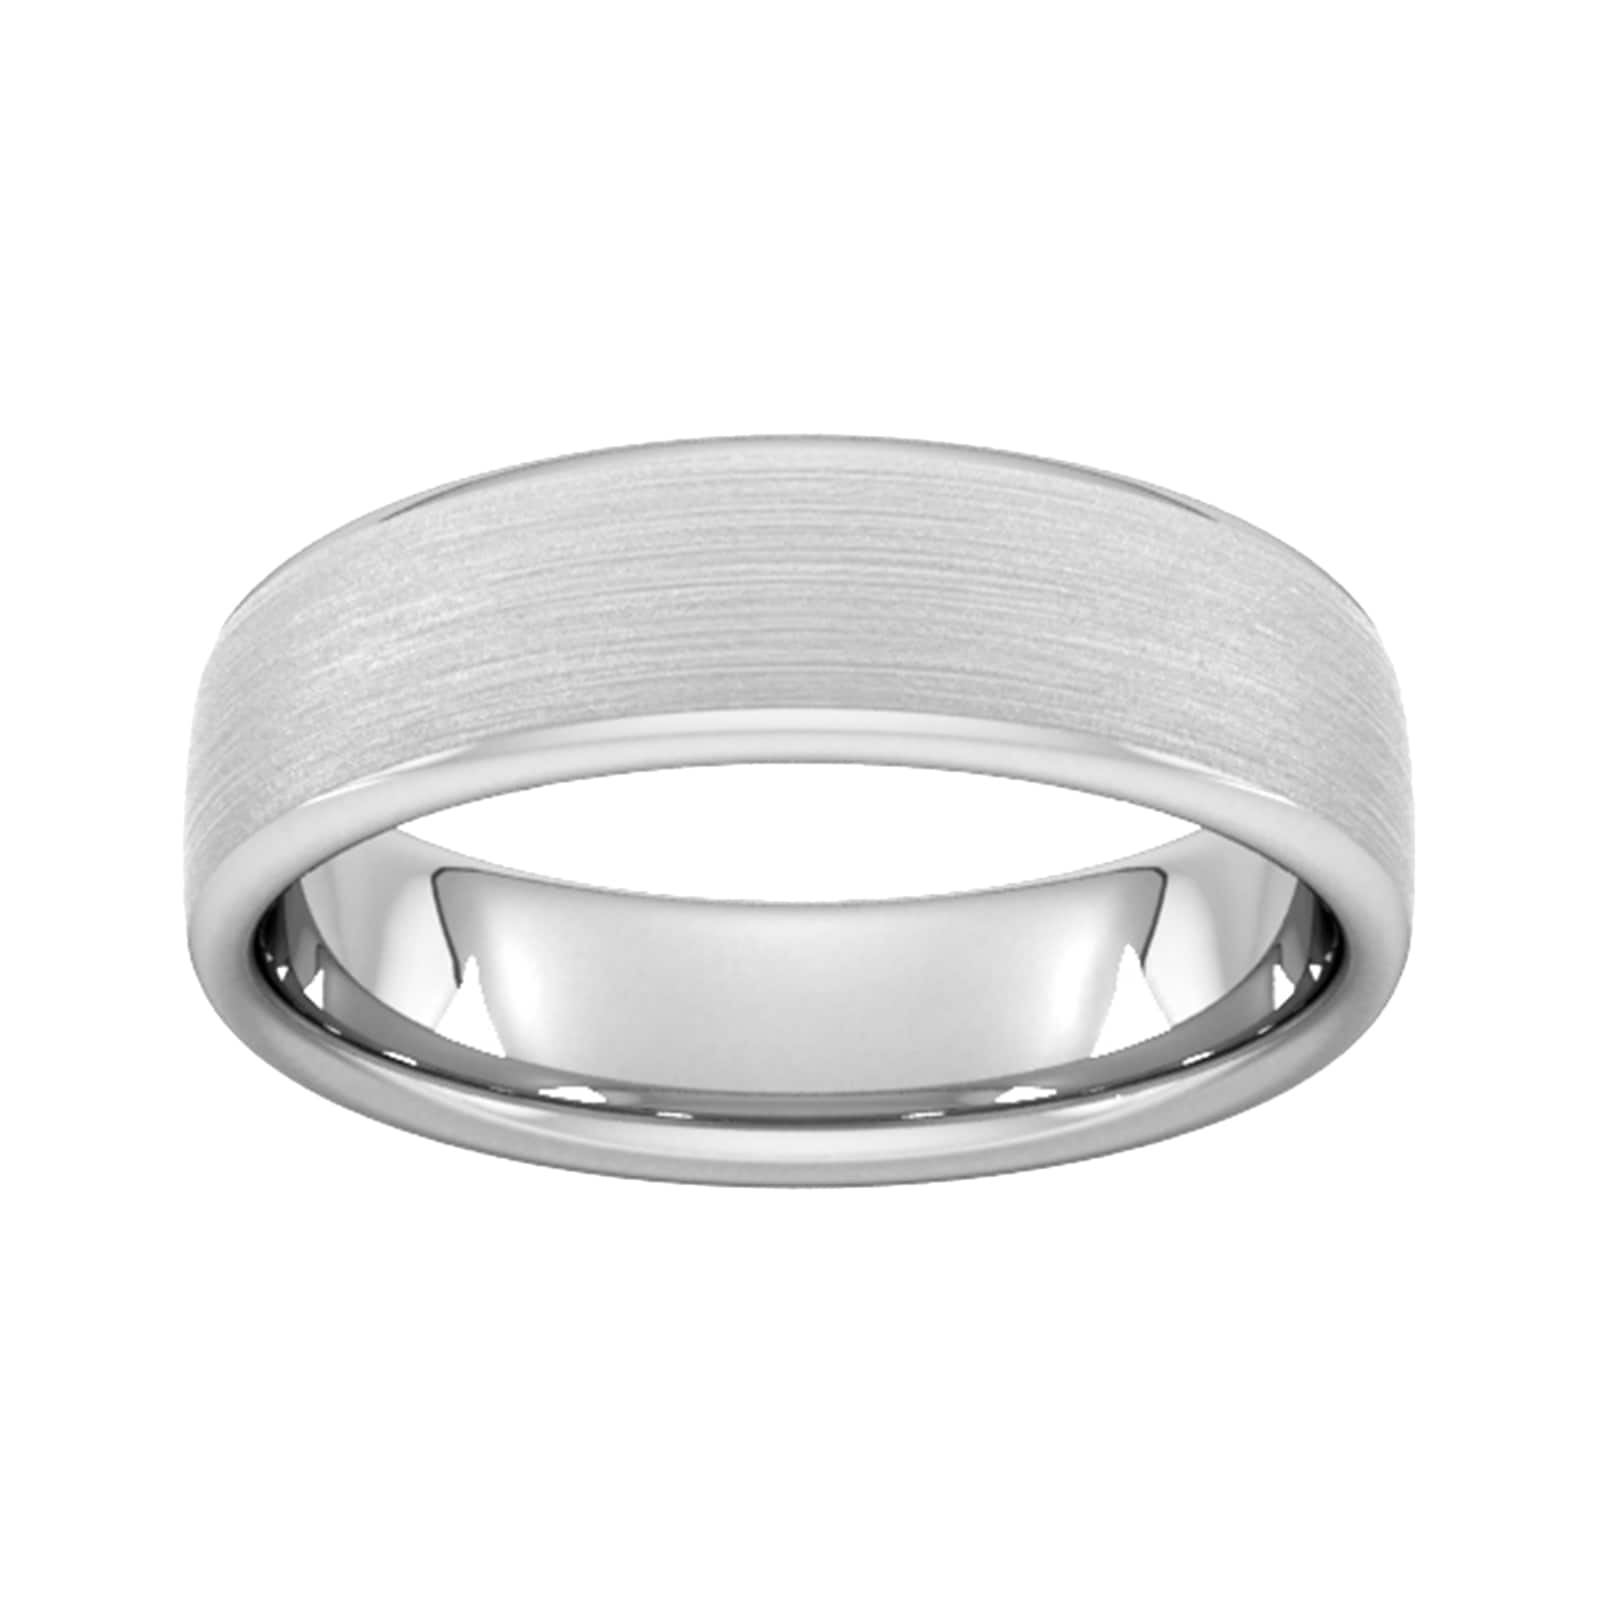 6mm Slight Court Standard Matt Finished Wedding Ring In 9 Carat White Gold - Ring Size Q